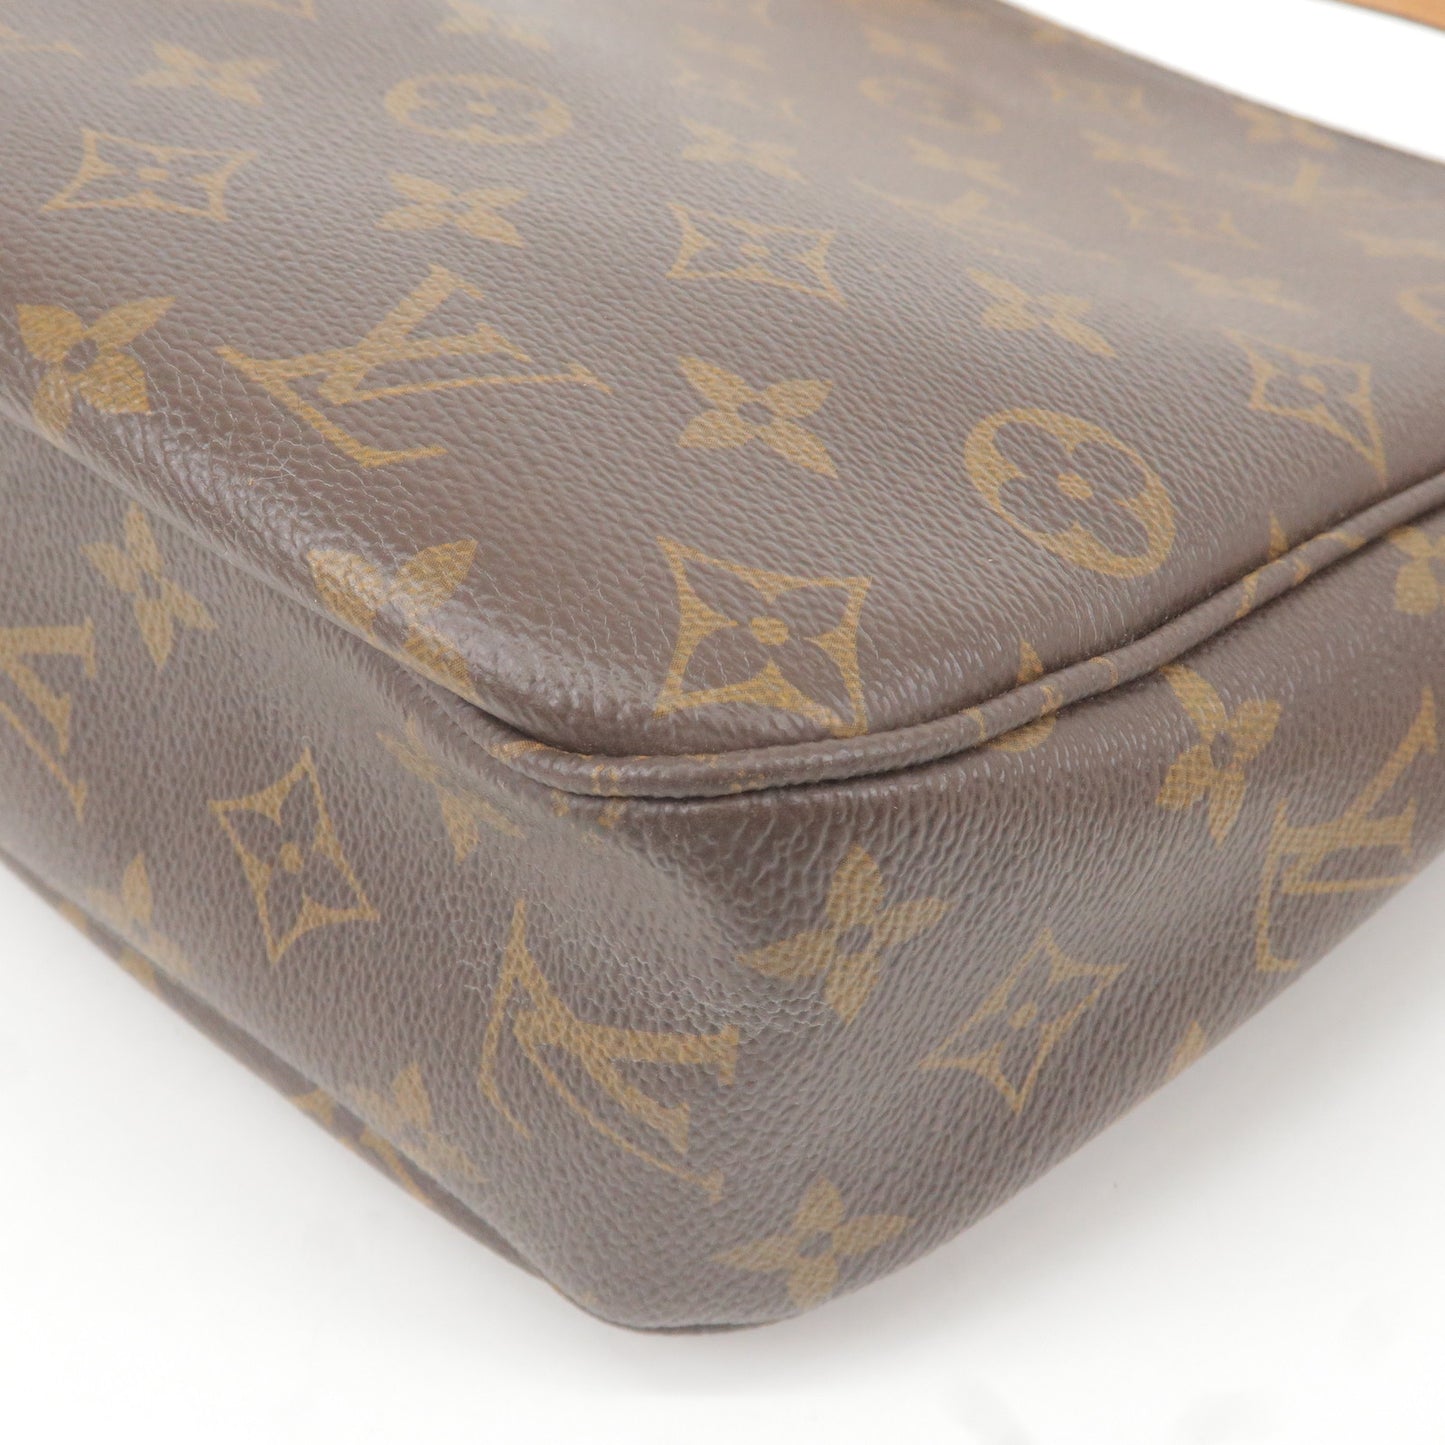  Louis Vuitton M44914 Shoulder Bag, Rare and Popular